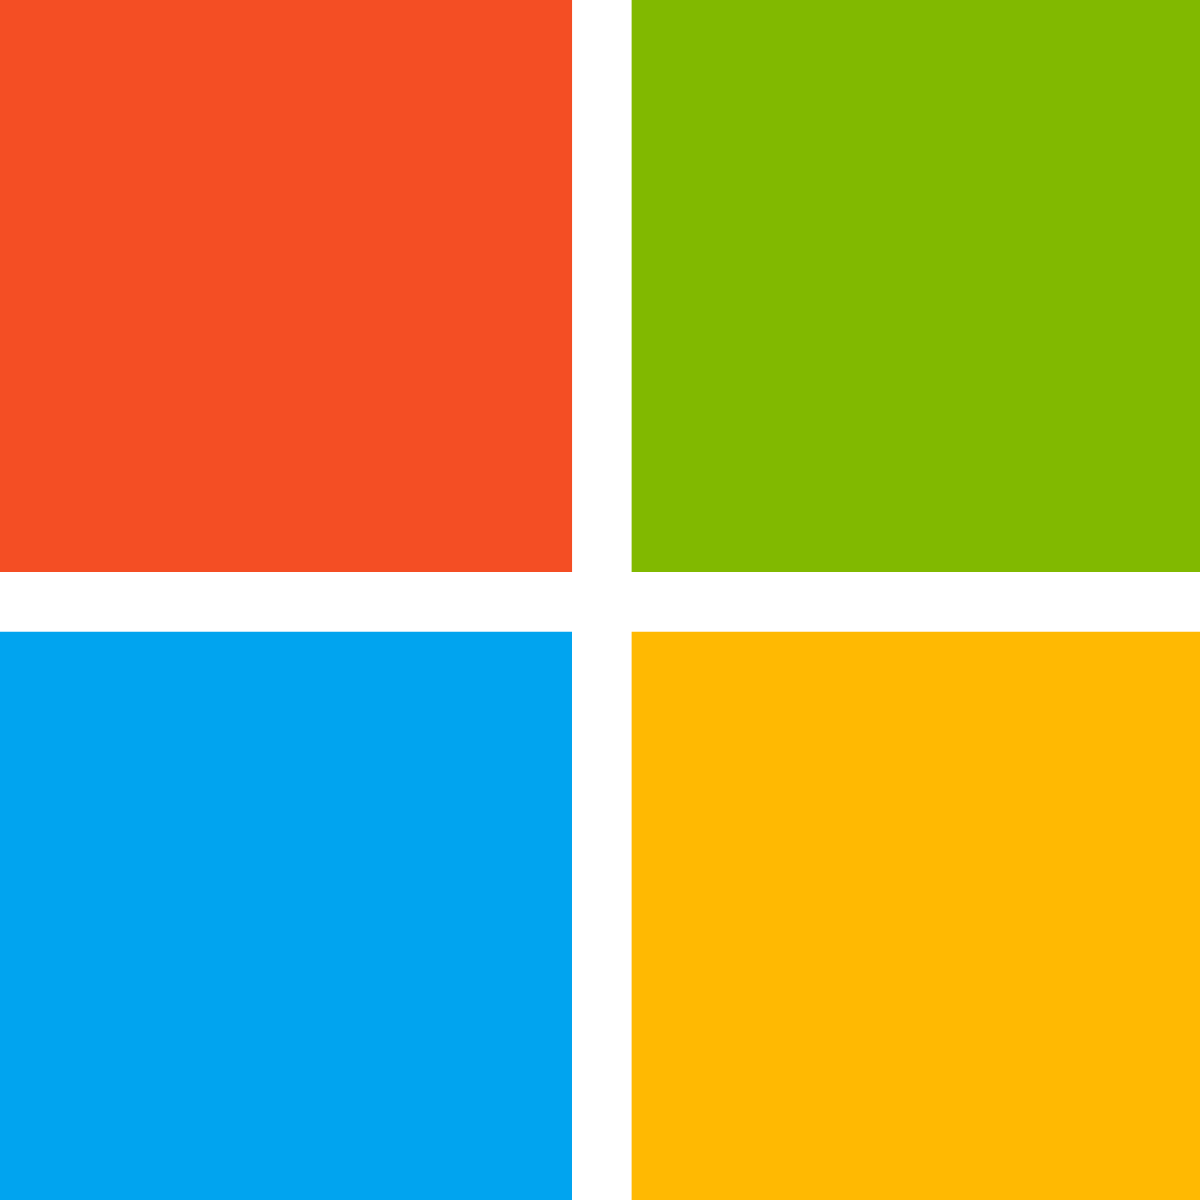 Microsoft Logo PNG Photo